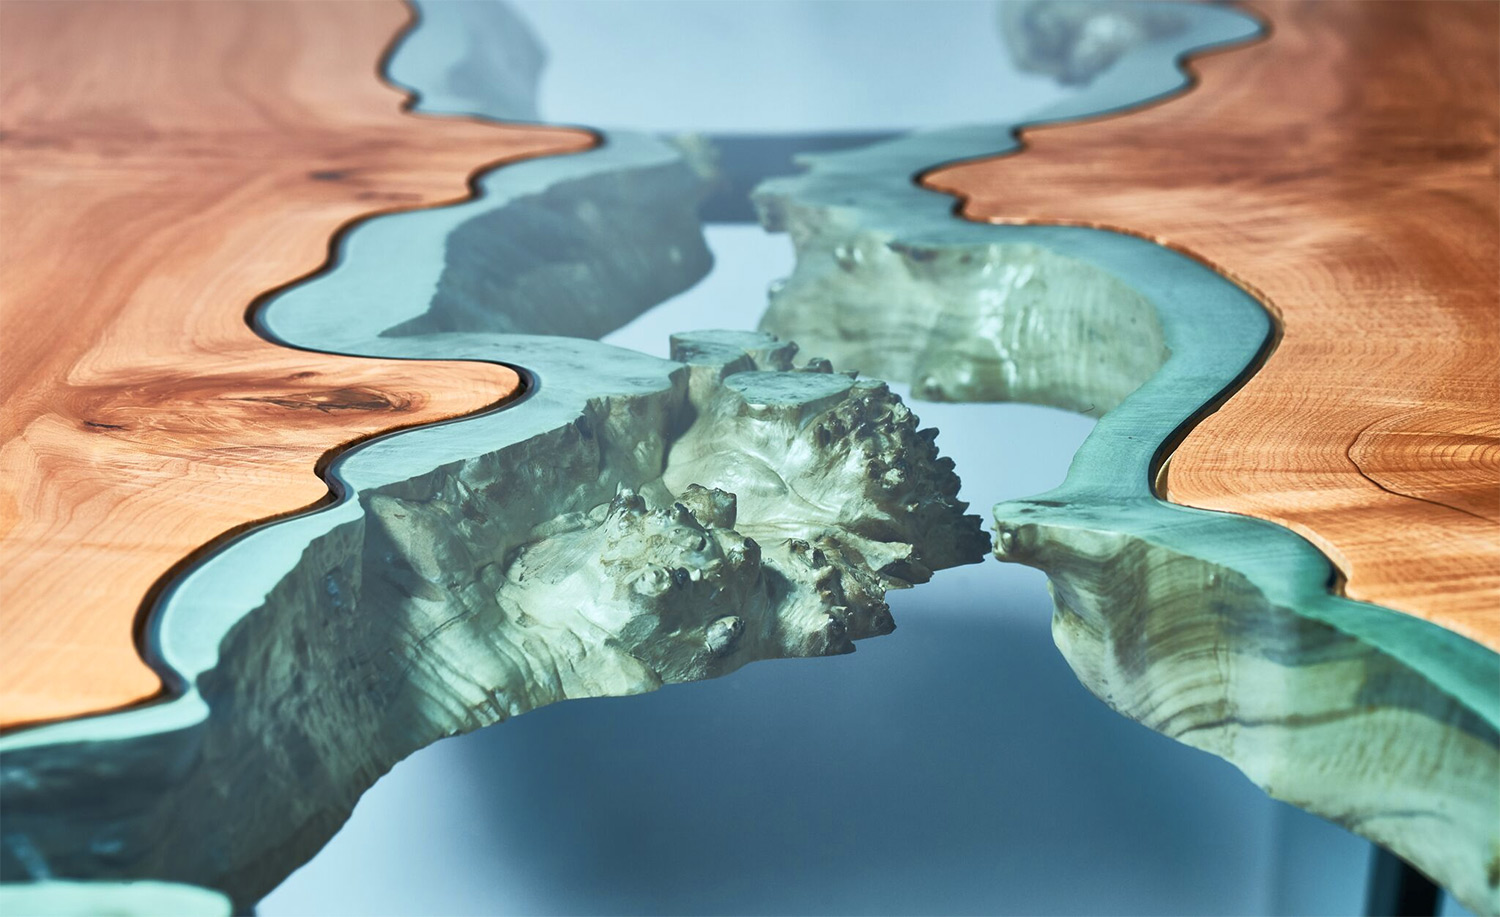 Islands of Wood Float Amidst Sea of Glass in New ‘Archipelago’ Furniture by Greg Klassen